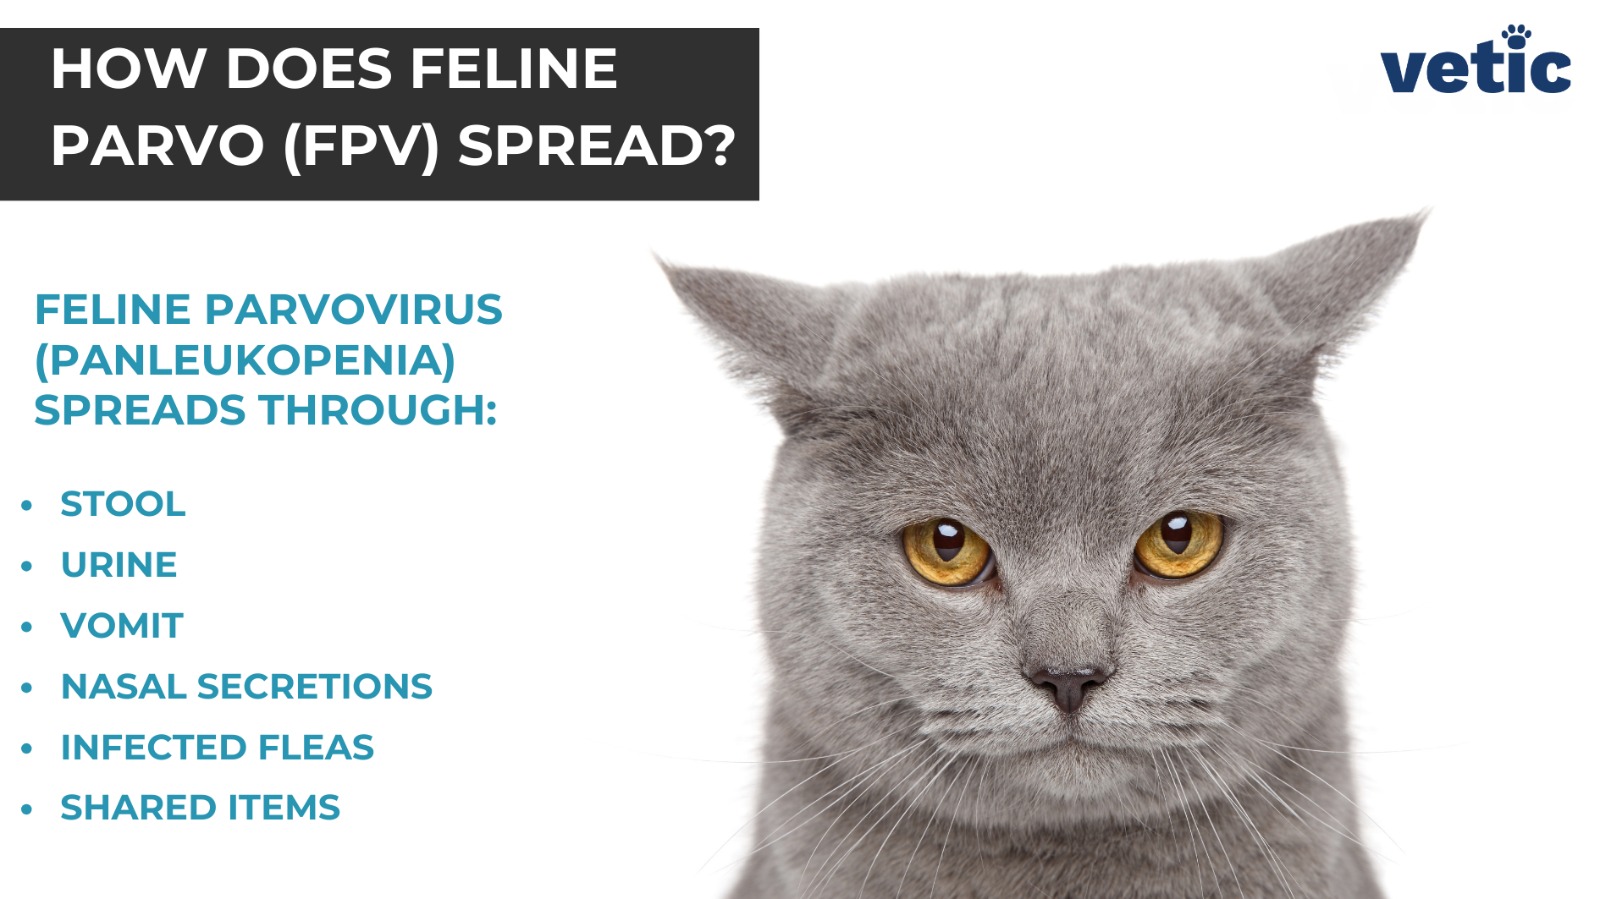 infographic on How Does Feline Parvo (FPV) Spread? Feline parvovirus (panleukopenia) spreads through: Stool, Urine, Vomit, Nasal Secretions, Infected Fleas and Shared Items